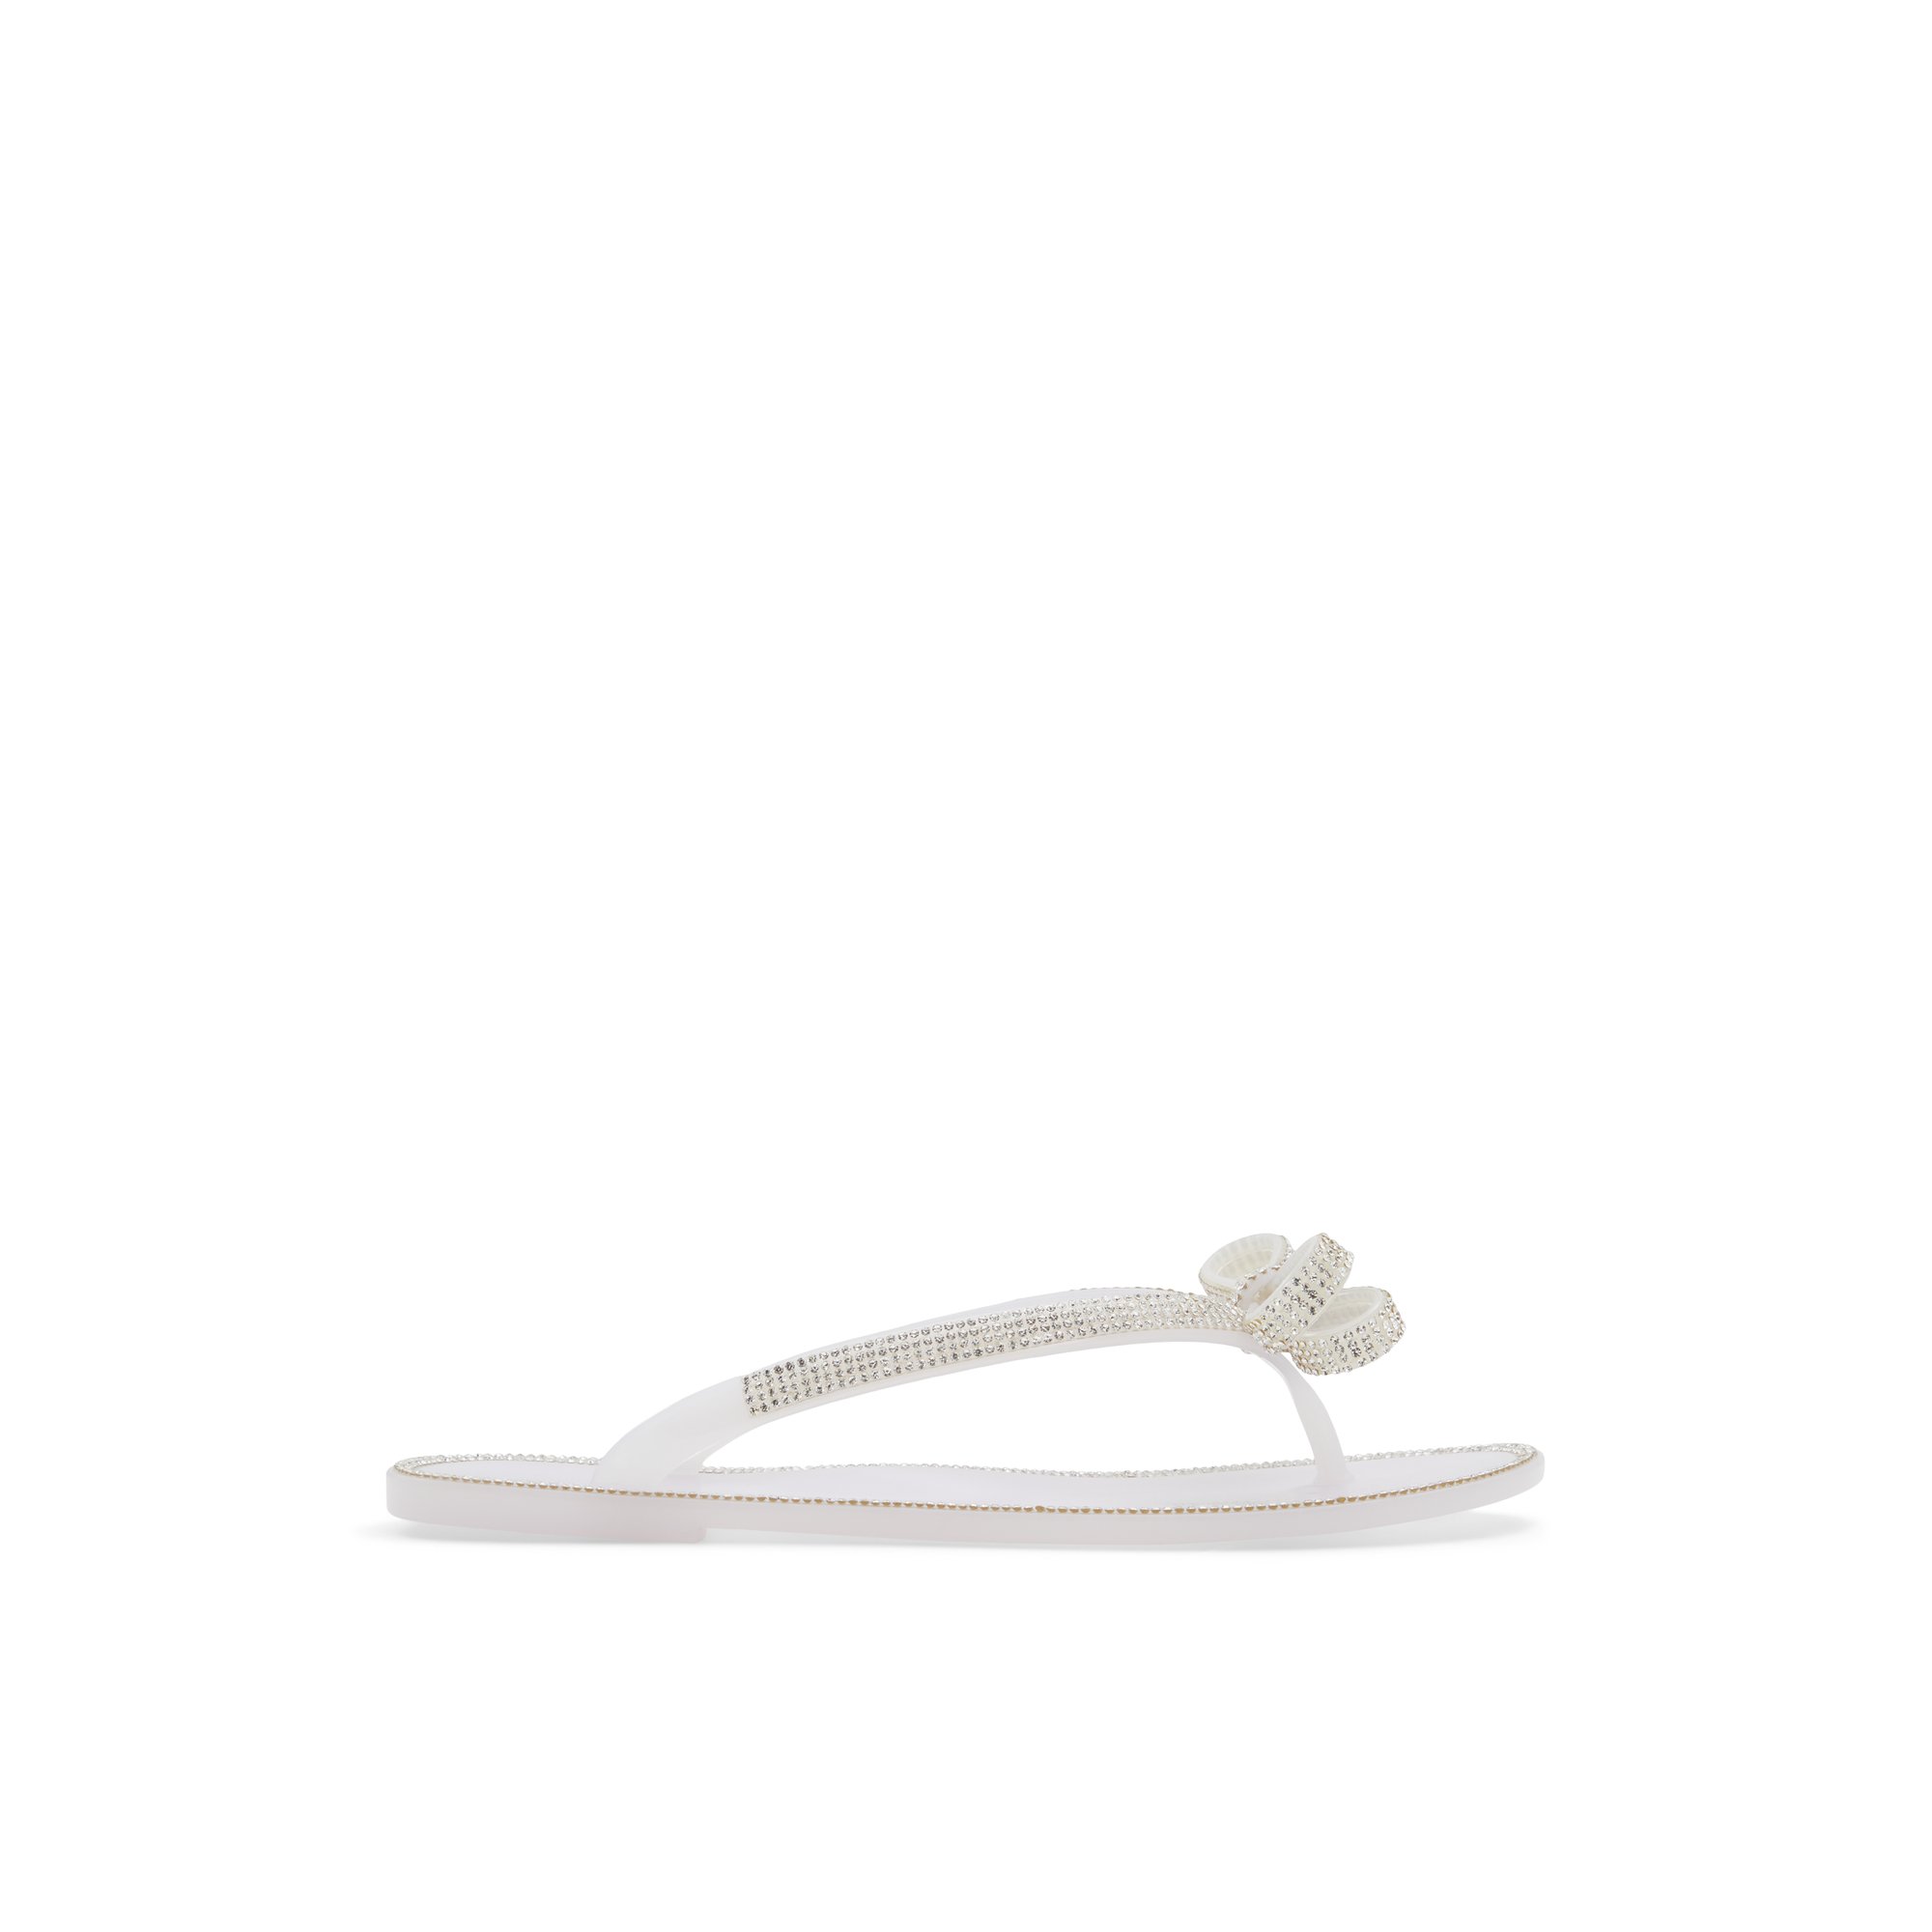 ALDO Kediracien - Women's Sandals - White